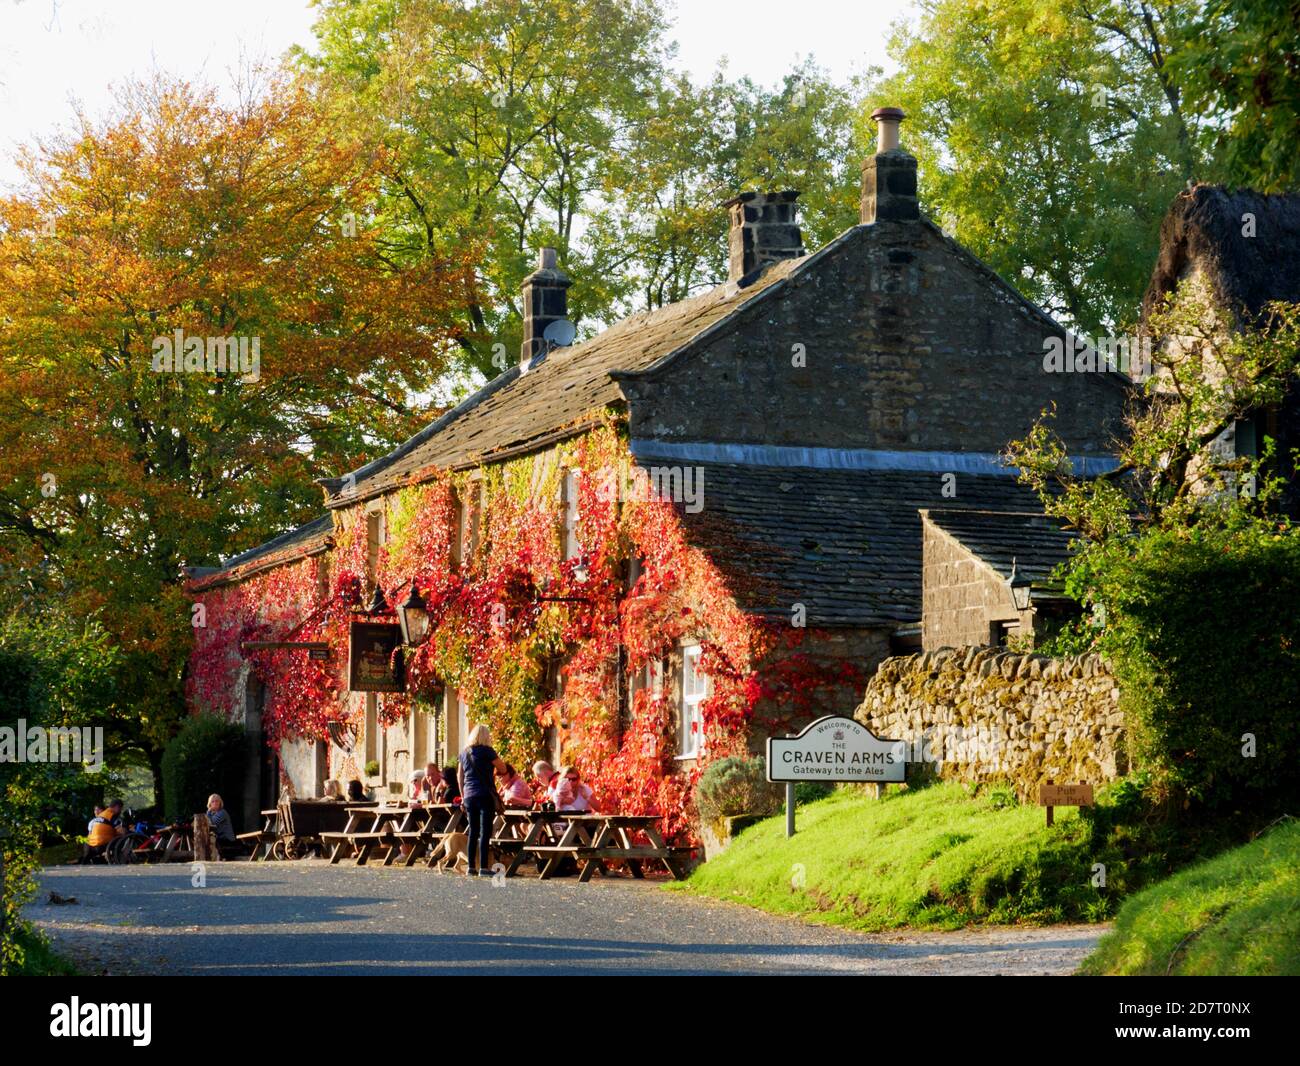 The pub at Craven Arms, Grassington, Yorkshire. Autumn. Stock Photo